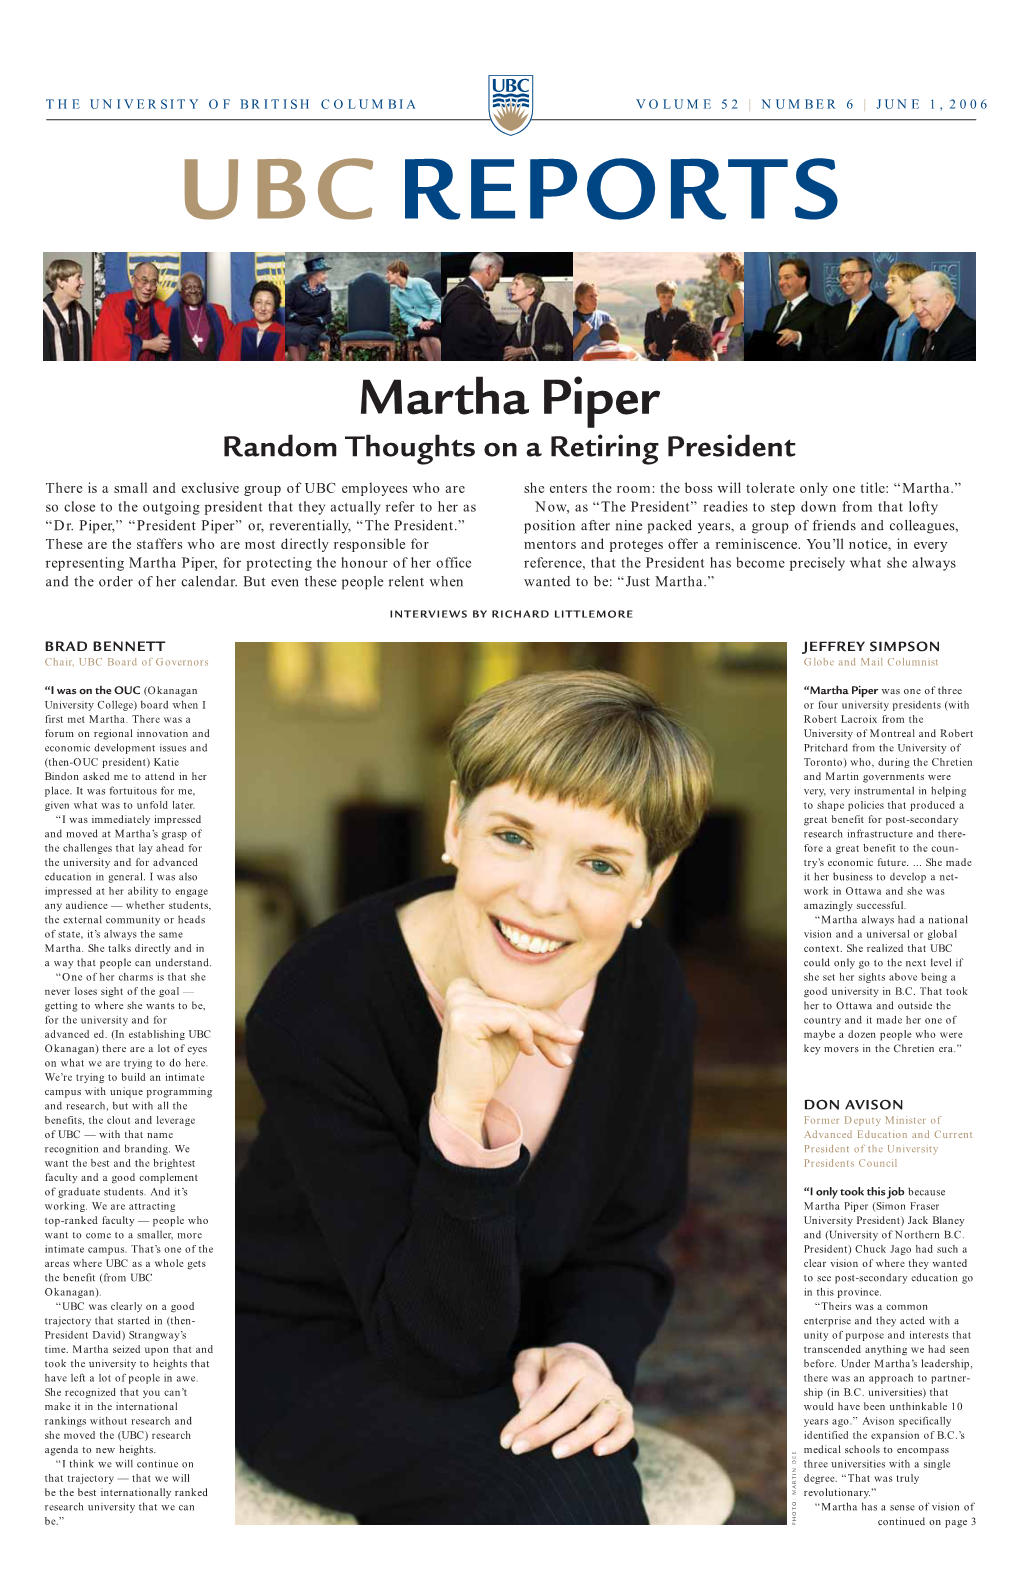 Martha Piper Random Thoughts on a Retiring President